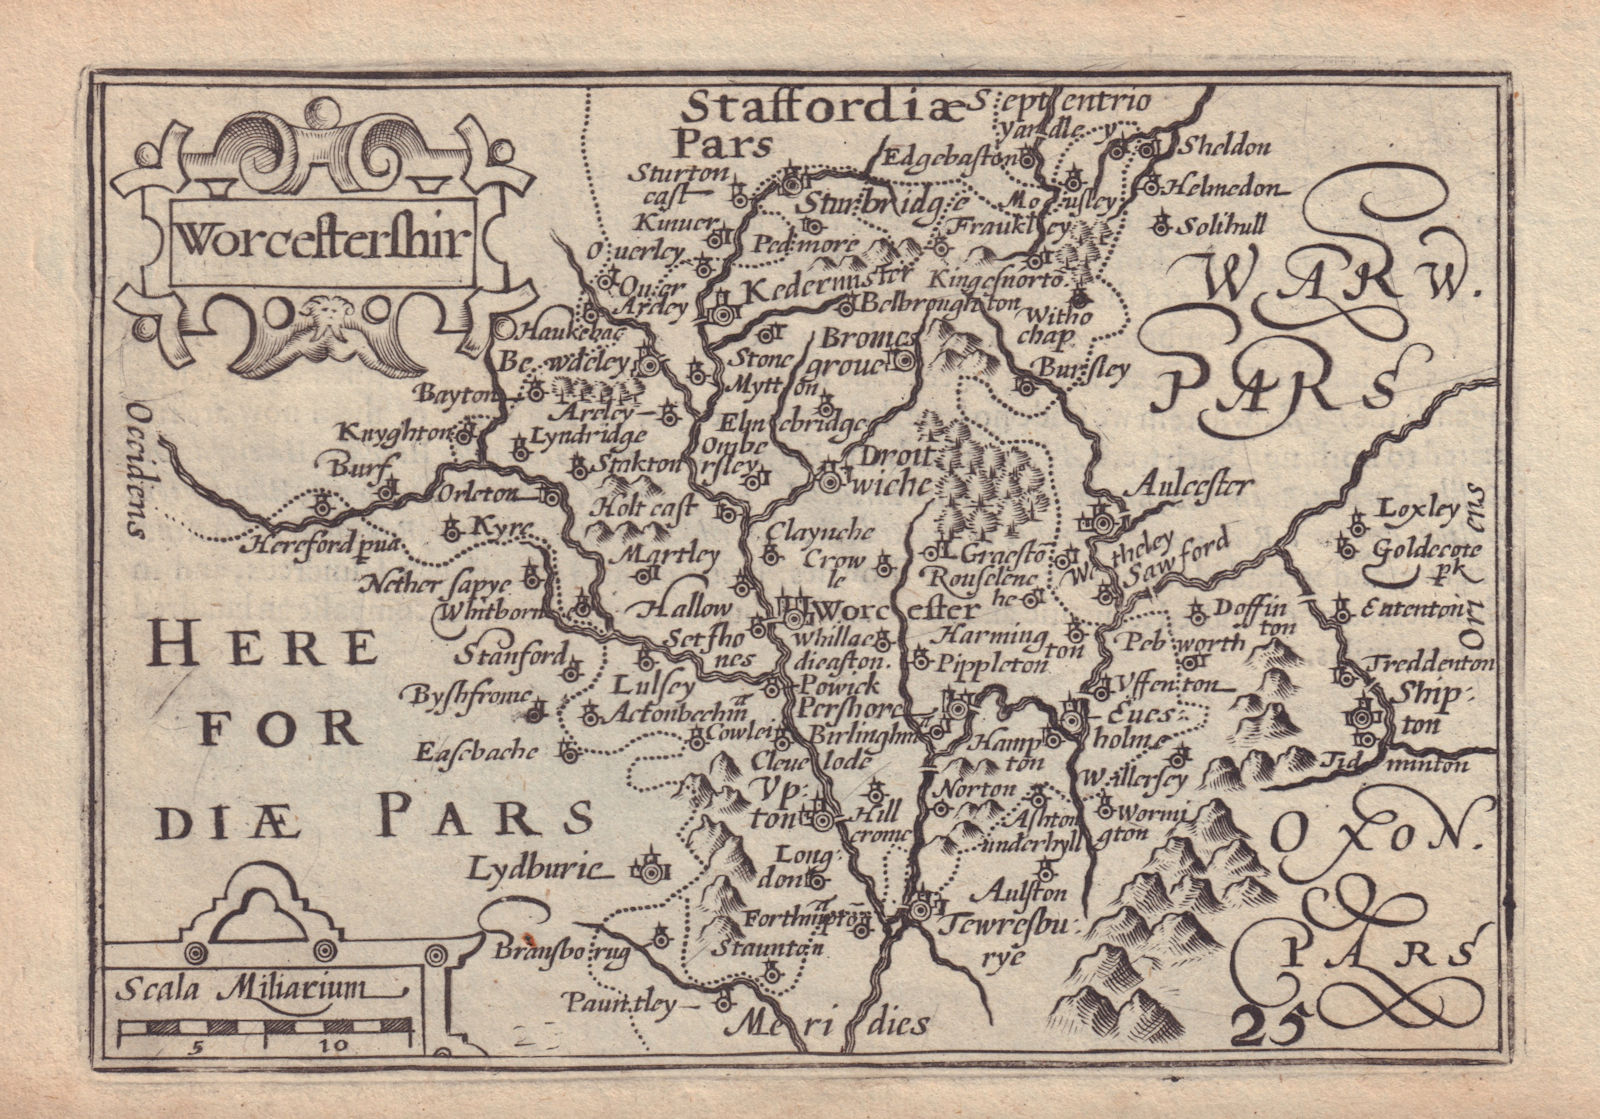 Associate Product Worcestershir by van den Keere. "Speed miniature" Worcestershire county map 1632